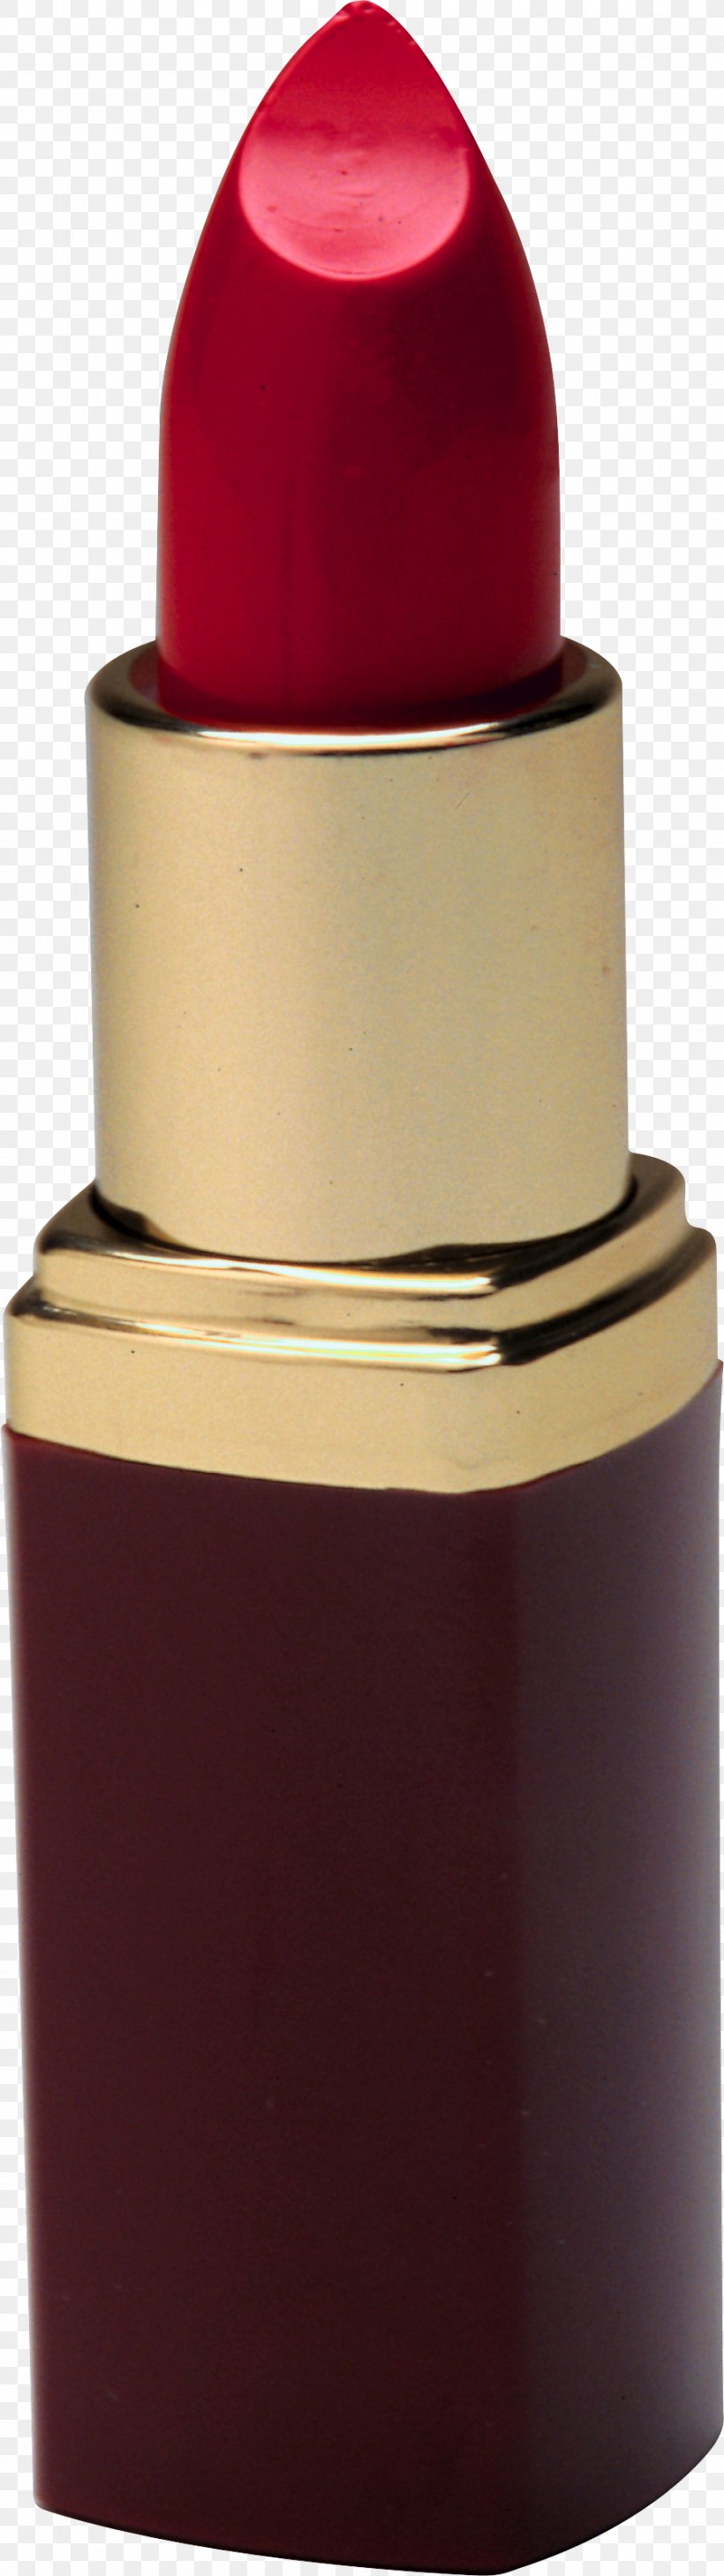 Lipstick Pomade Icon, PNG, 898x3195px, Lip Balm, Beauty, Cosmetics, Cosmetology, Lipstick Download Free